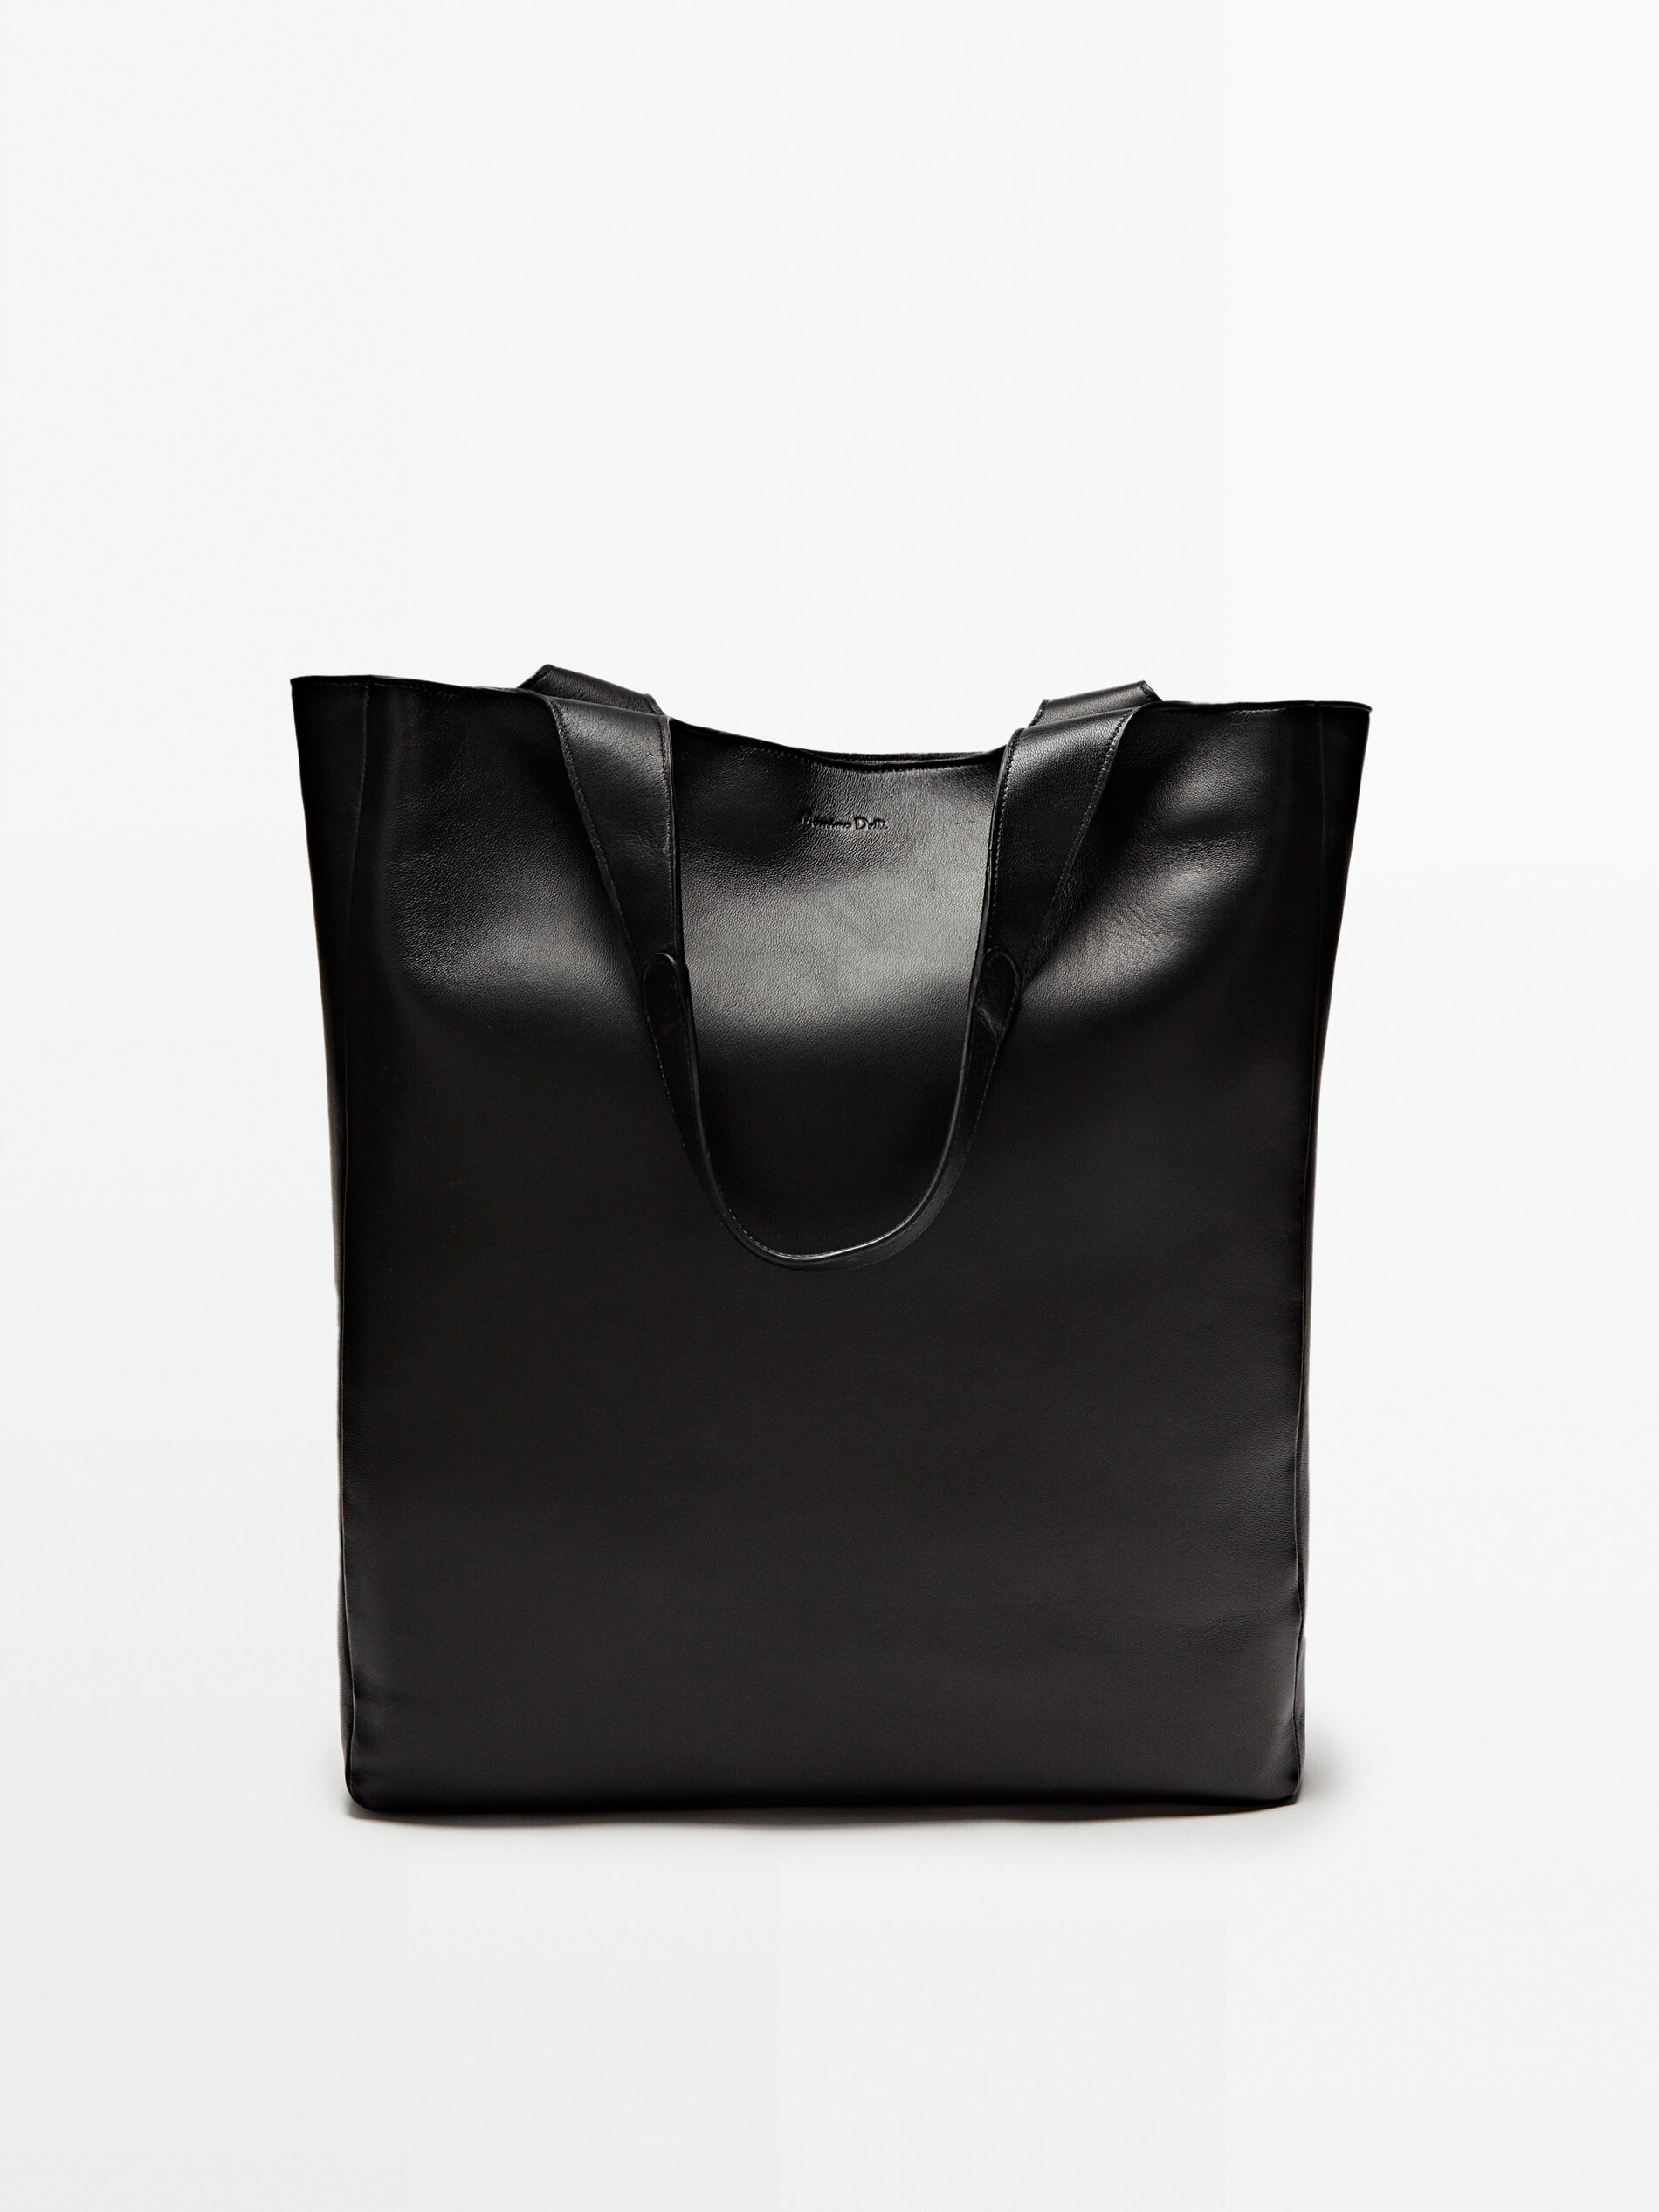 Aggregate more than 70 black leather tote bag - in.duhocakina